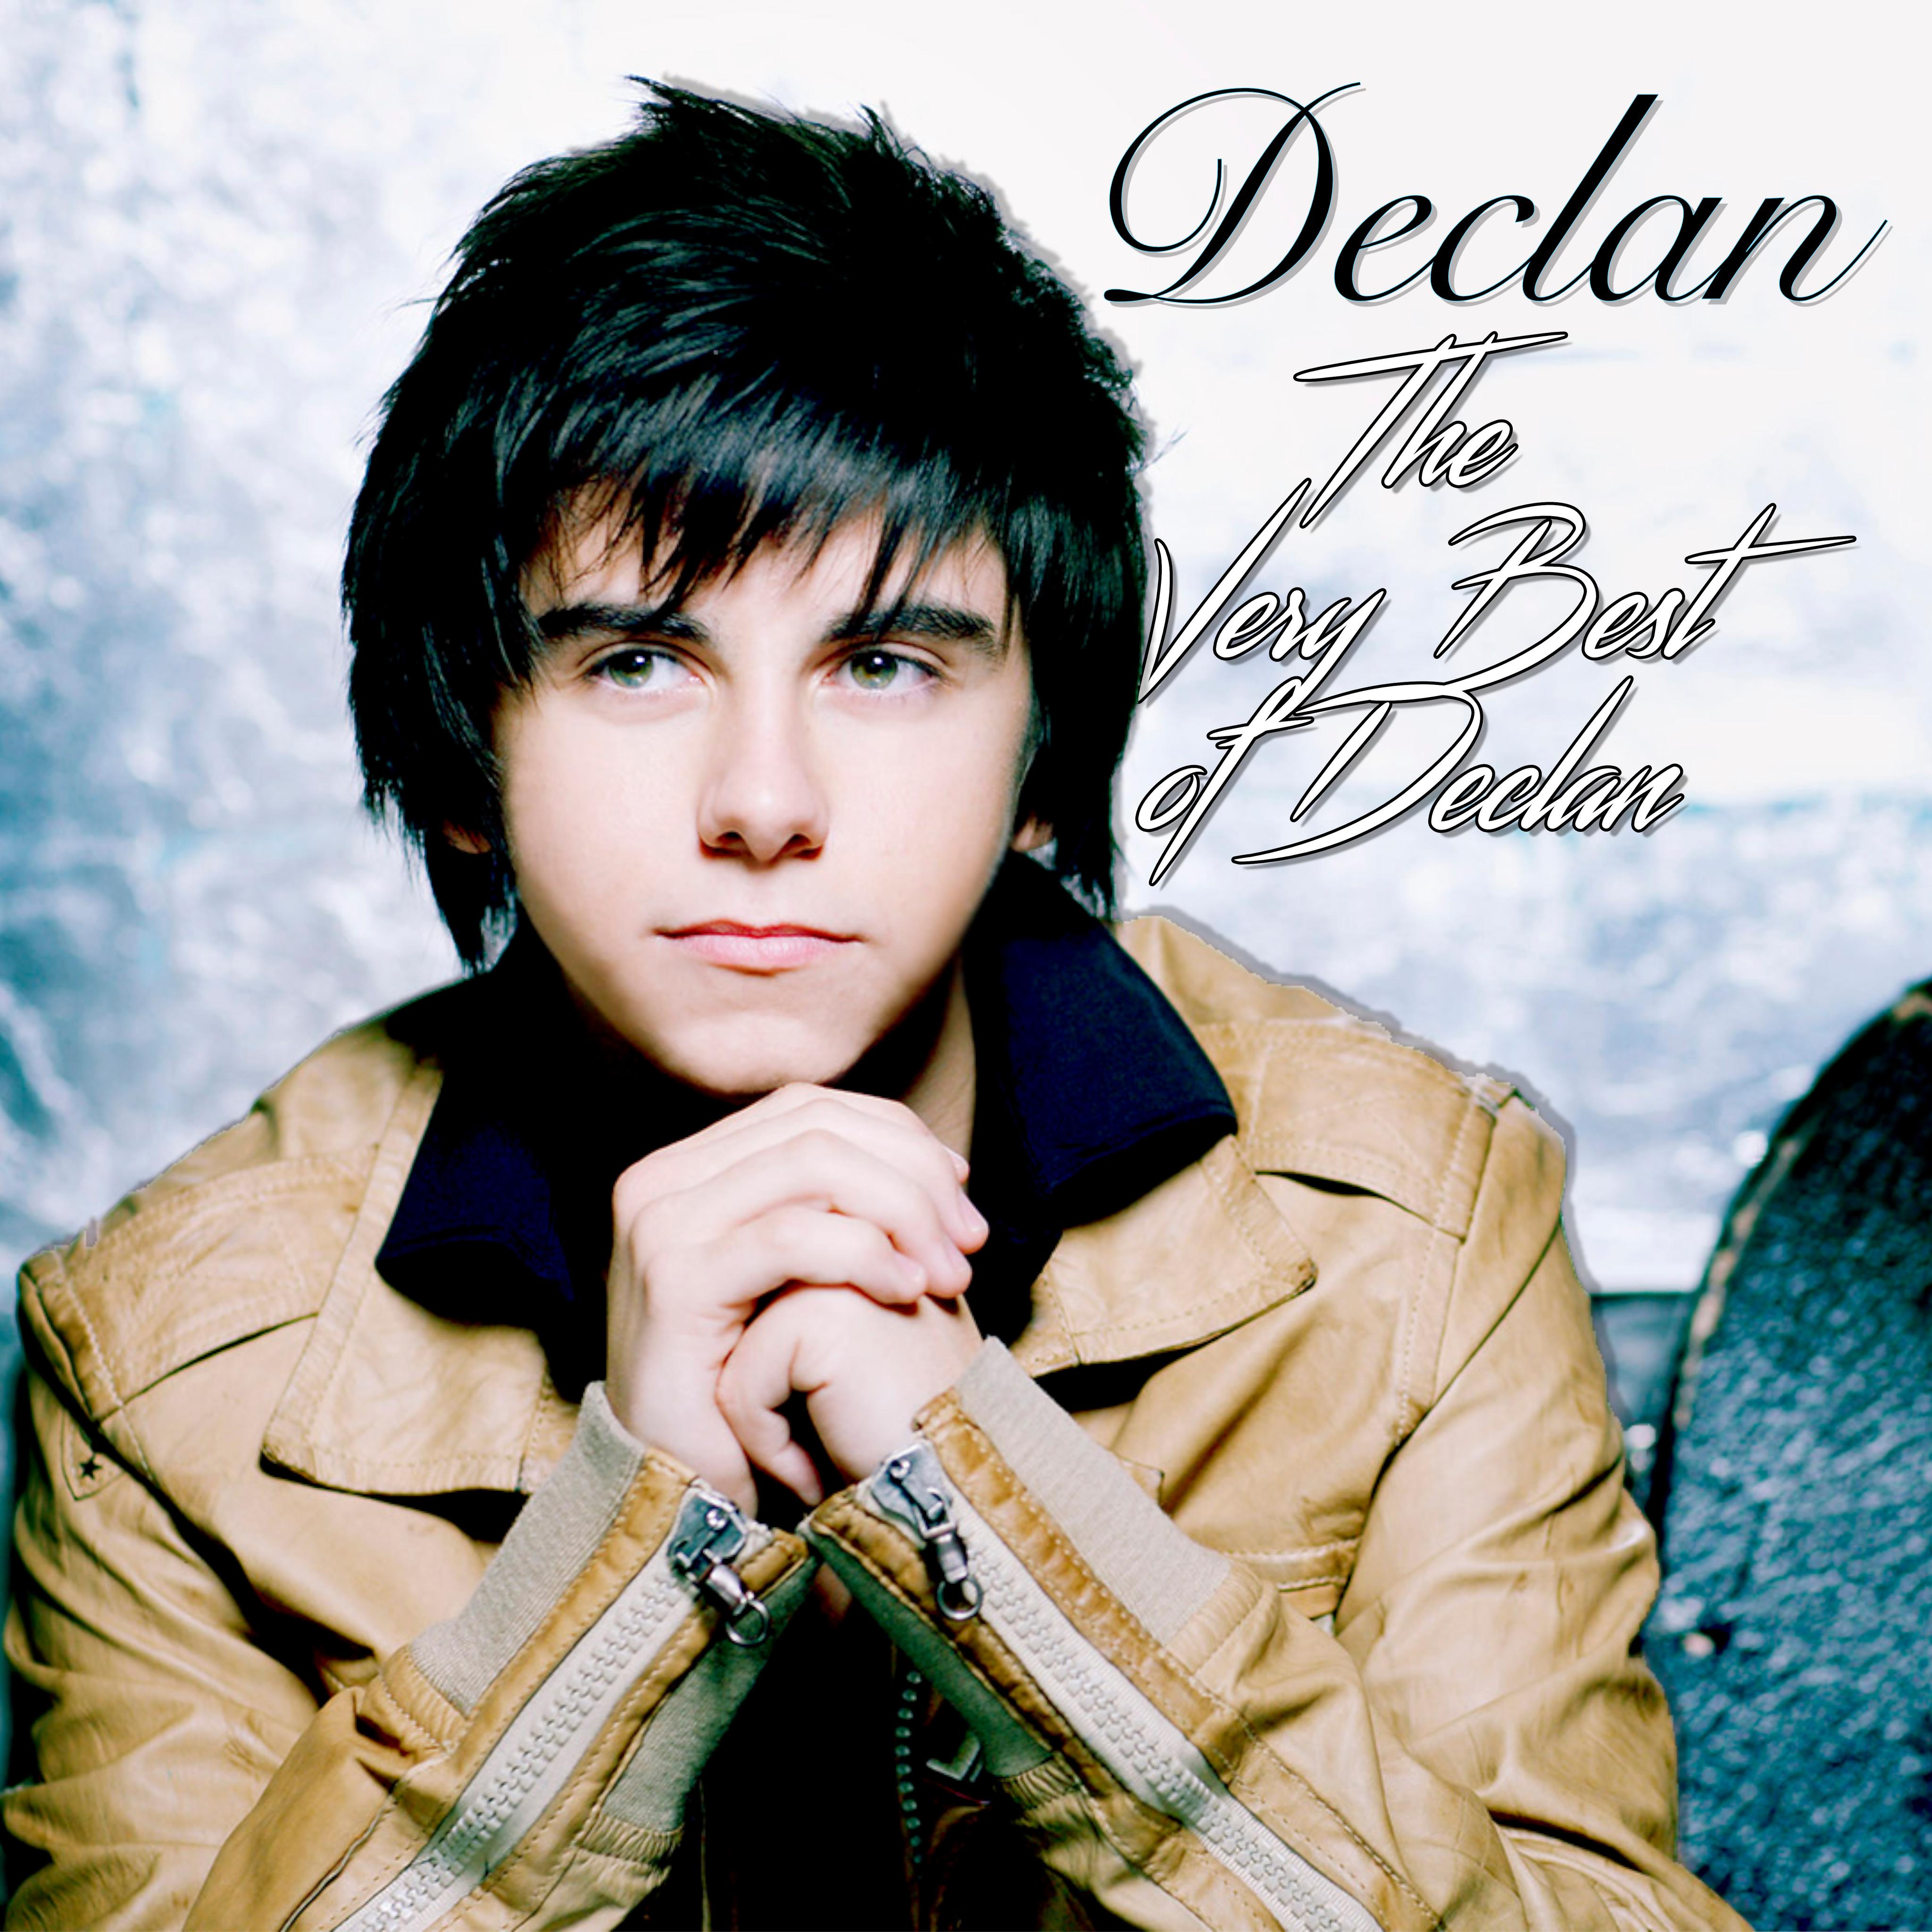 The Very Best of Declan